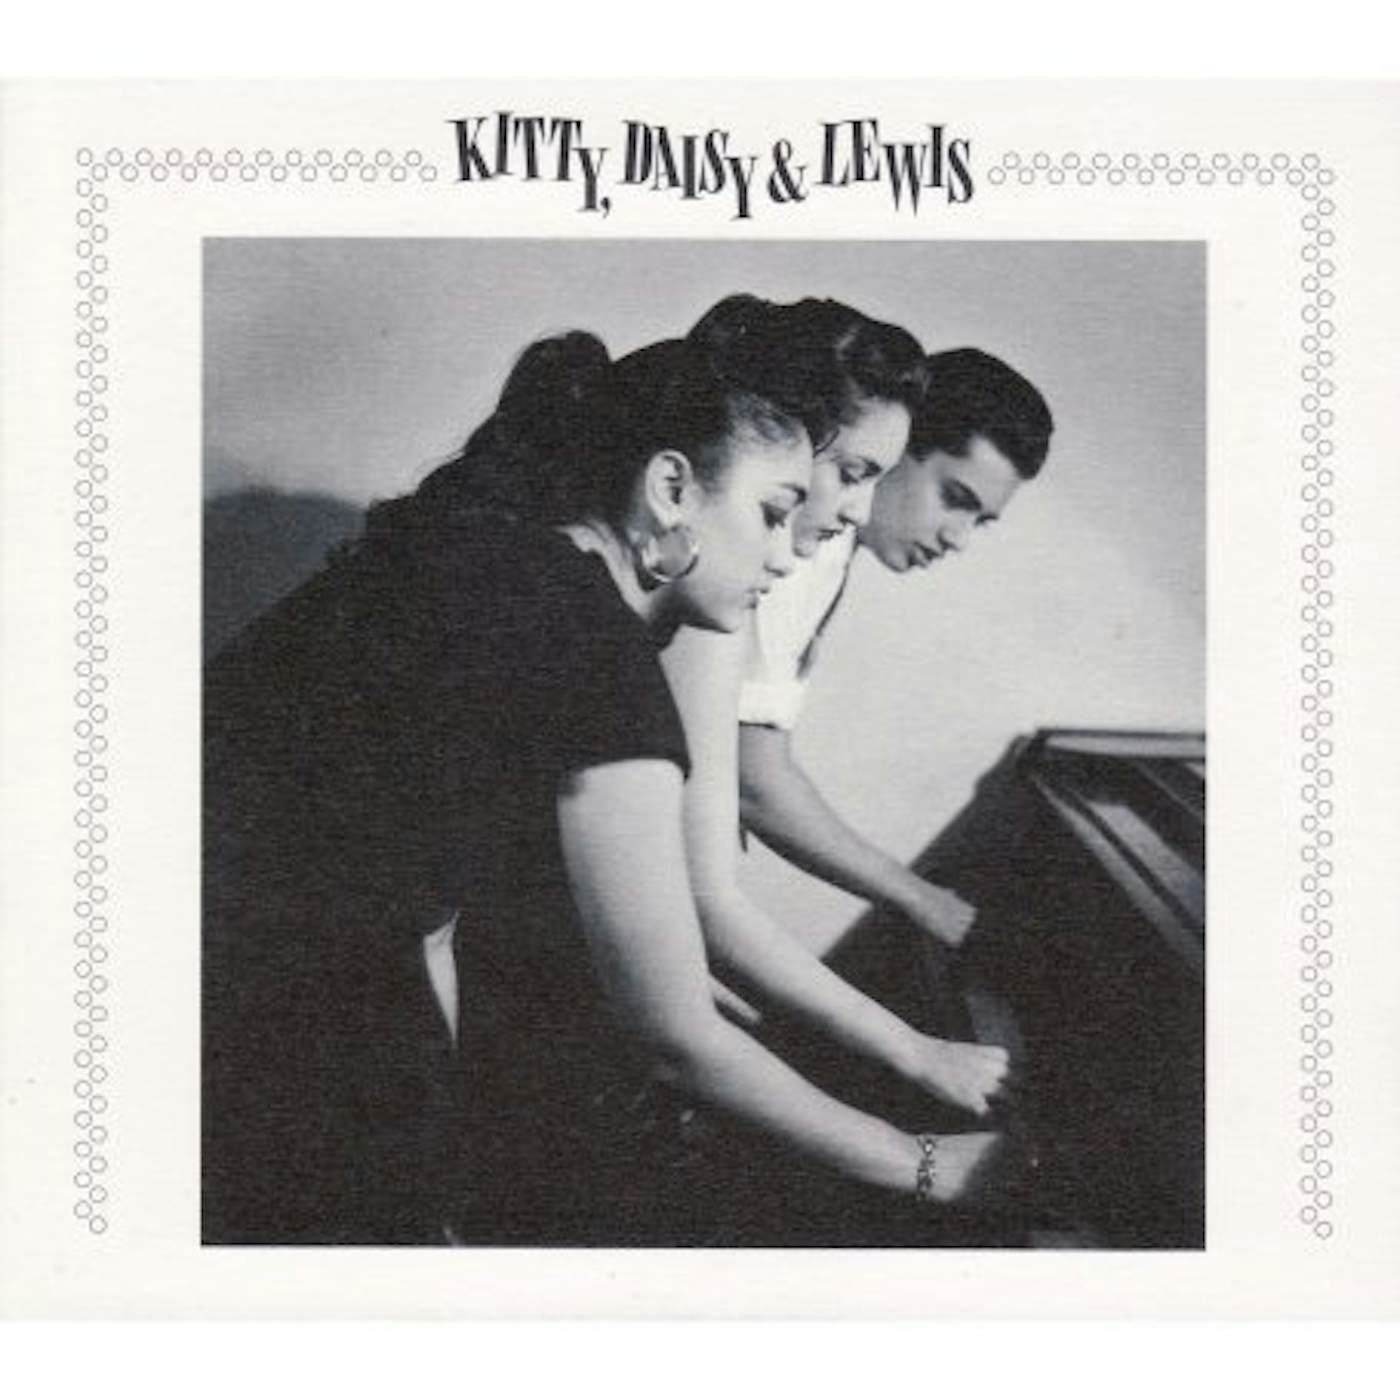 Kitty, Daisy & Lewis Vinyl Record